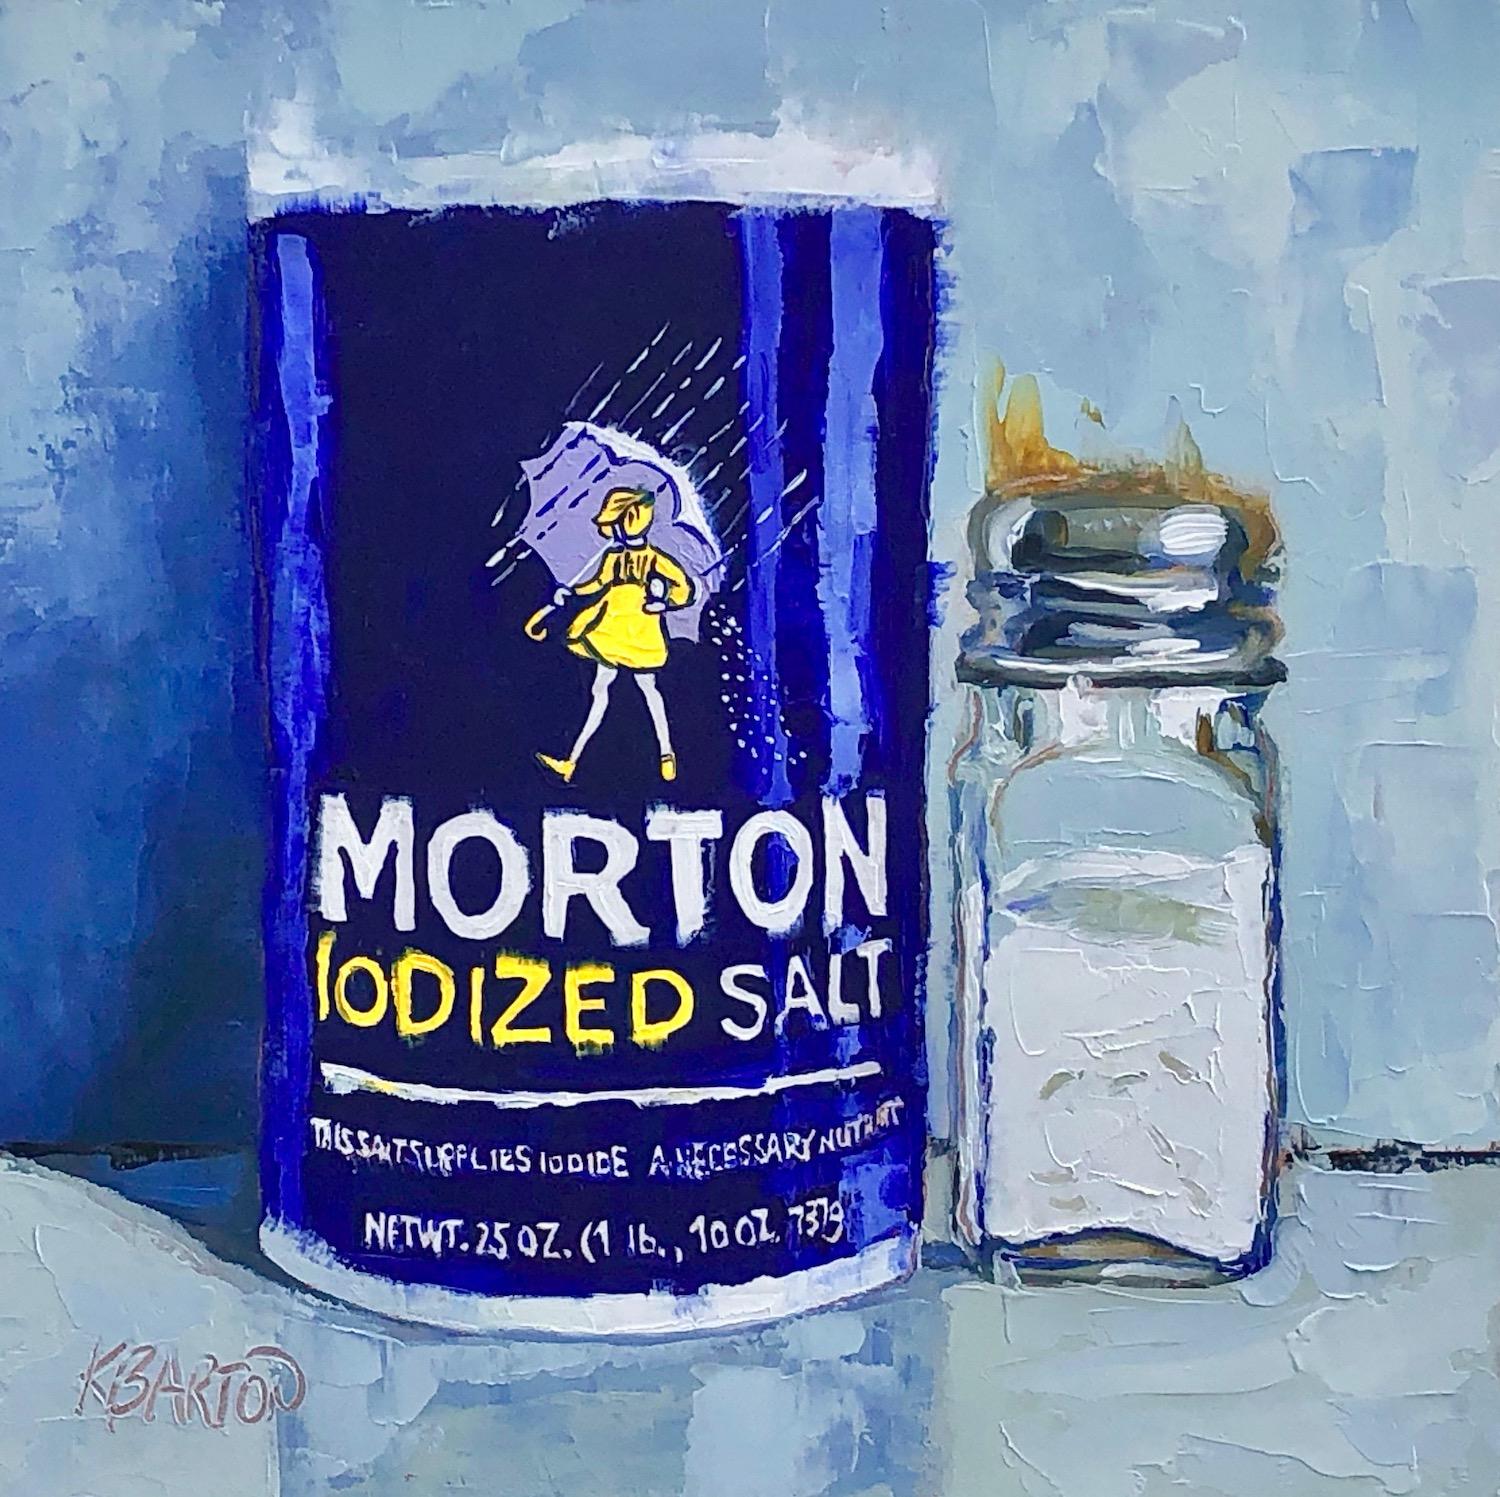 Two Salts - Art by Karen Barton